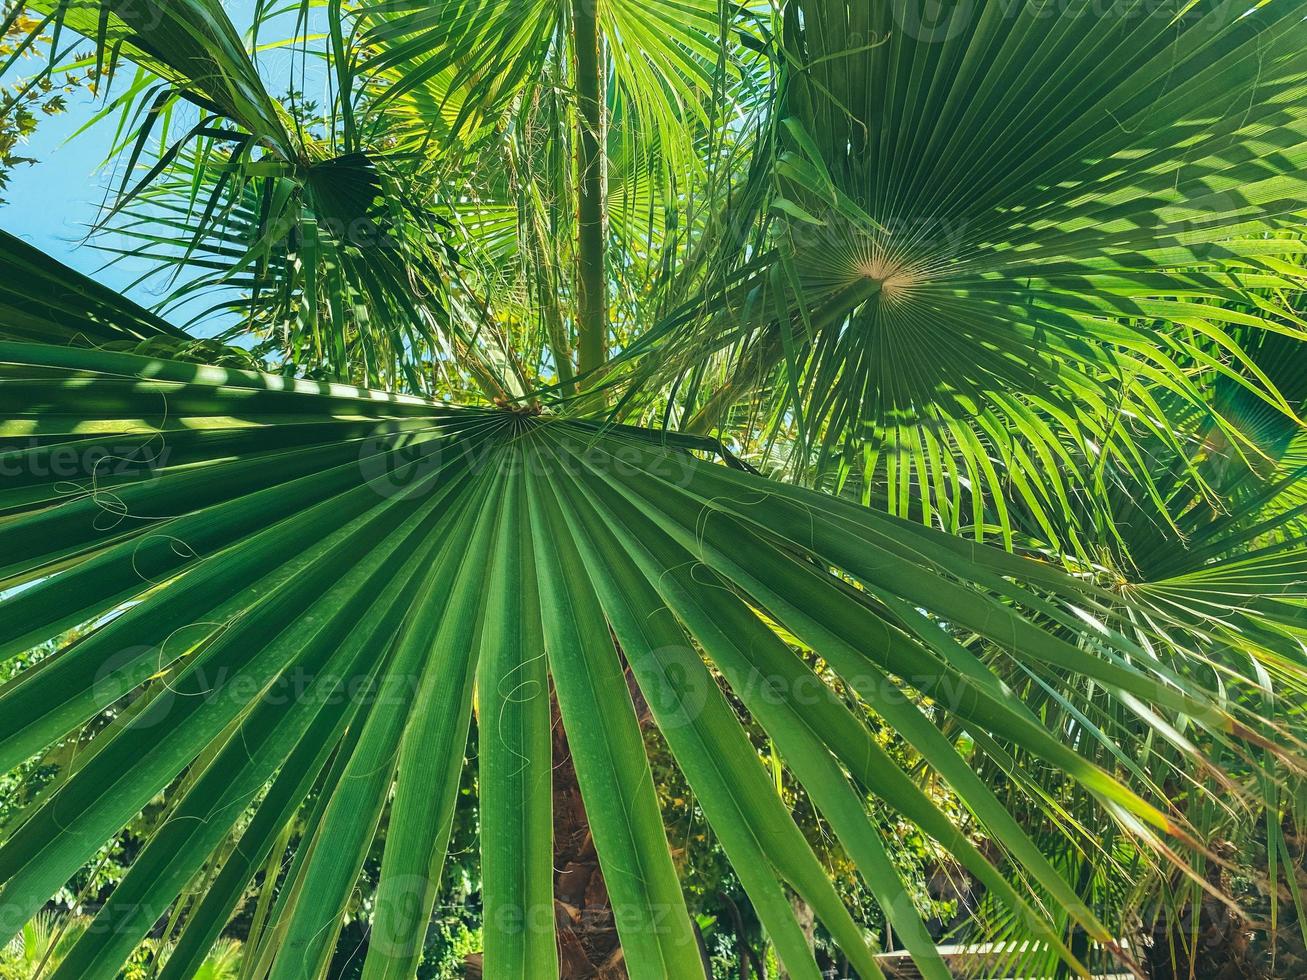 plantas verdes exóticas en un país cálido. palmeras con largas hojas verdes. textura, fondo natural con rama de palma foto